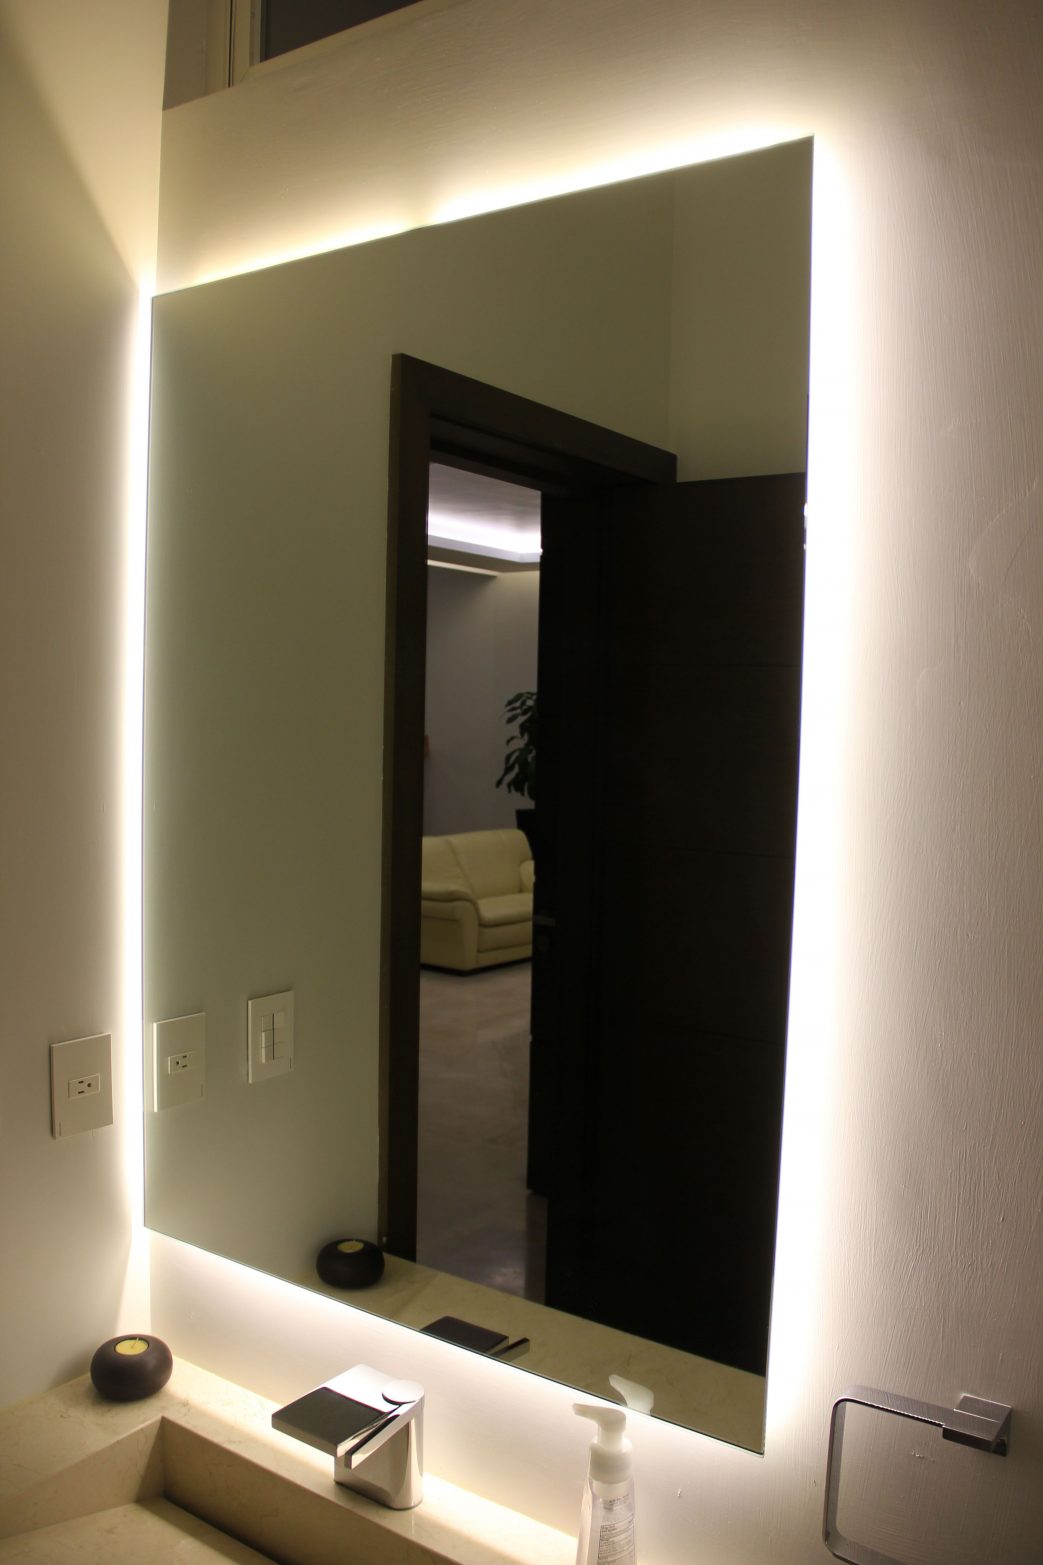 Change lighting to reform the bathroom